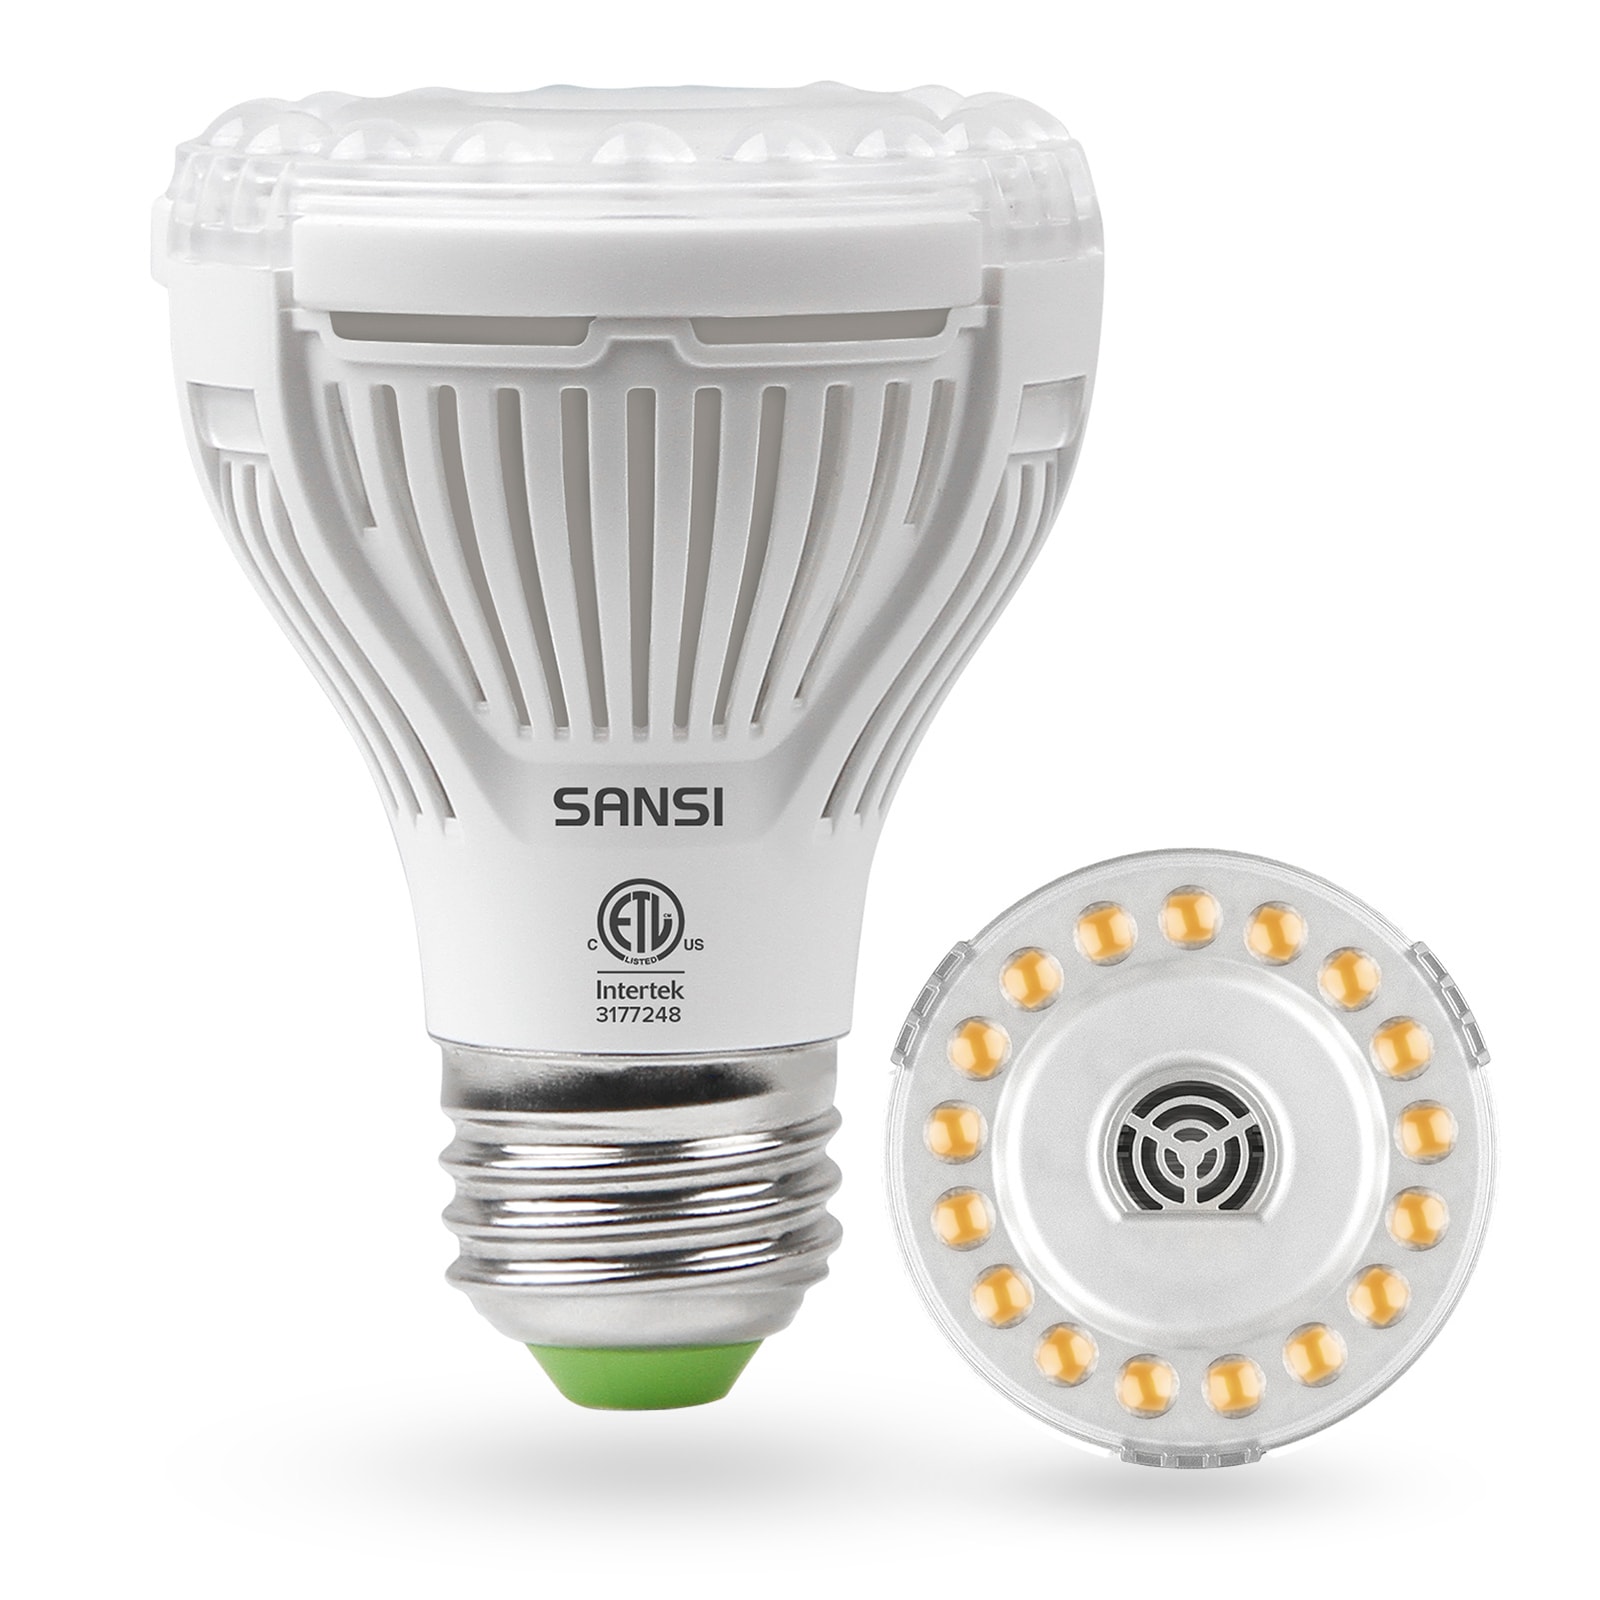 SANSI Grow Light Bulbs 10-Watt (150-Watt EQ) LED Grow Light the Bulbs department at Lowes.com